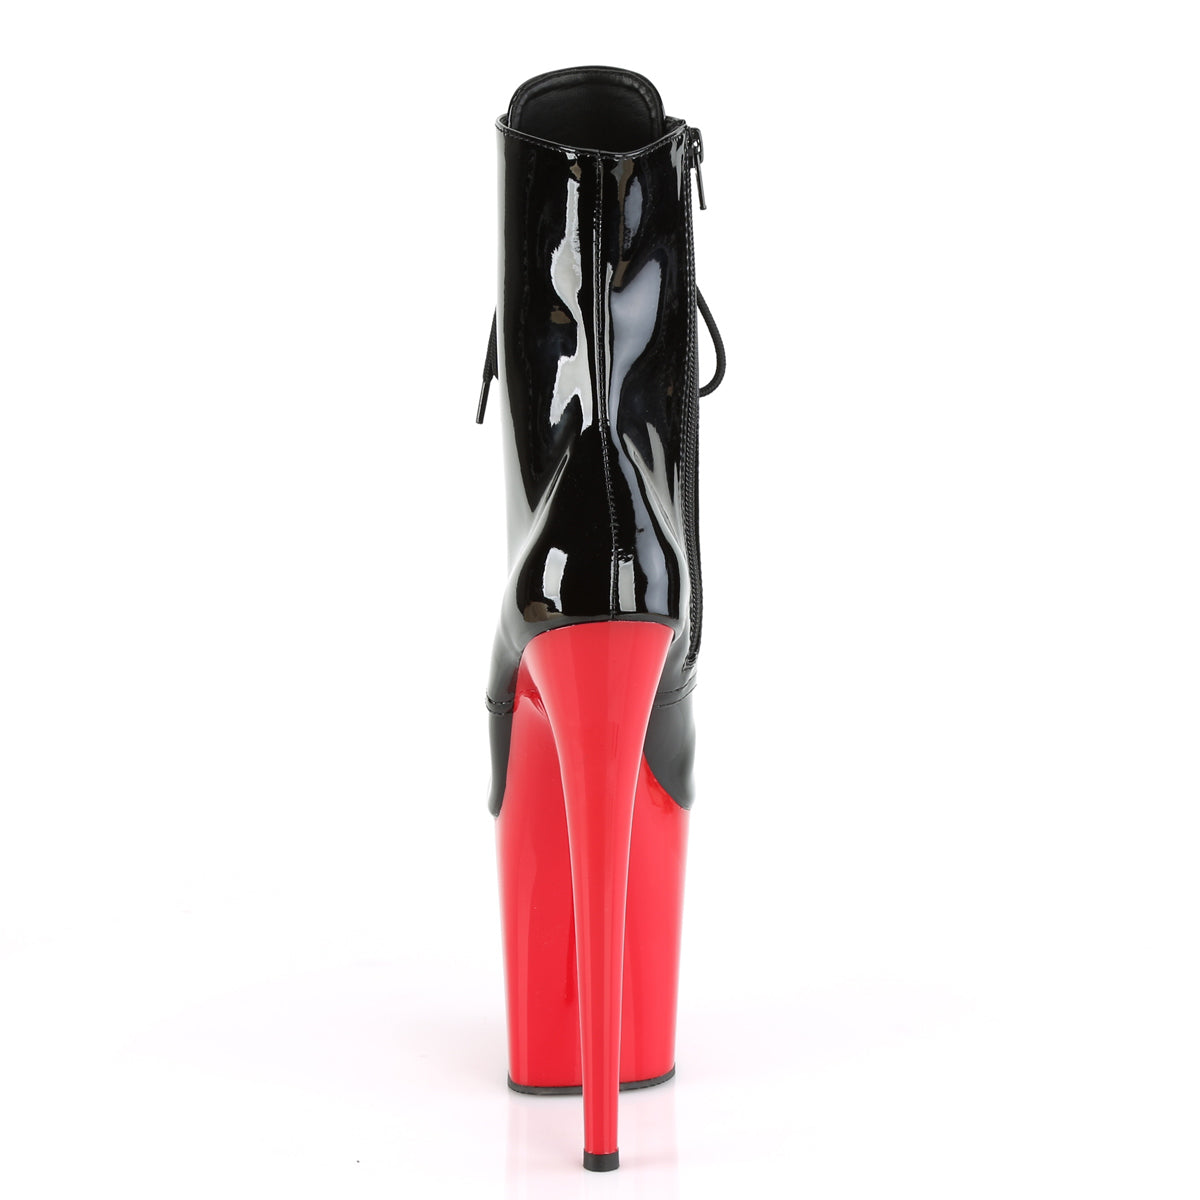 FLAMINGO-1020 Pleaser Black Patent/Red Platform Shoes [Pole Dancing Ankle Boots]